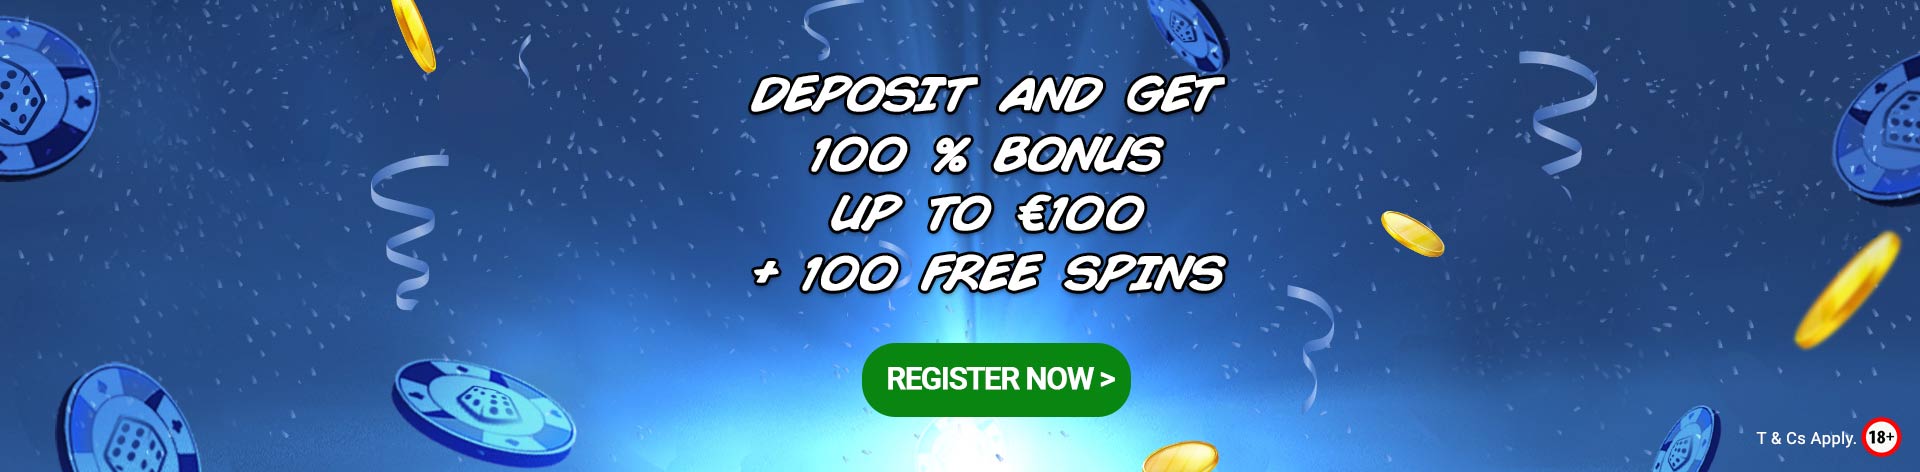 Deposit and get 100 % Bonus up to €100 + 100 Free Spins. Register now!